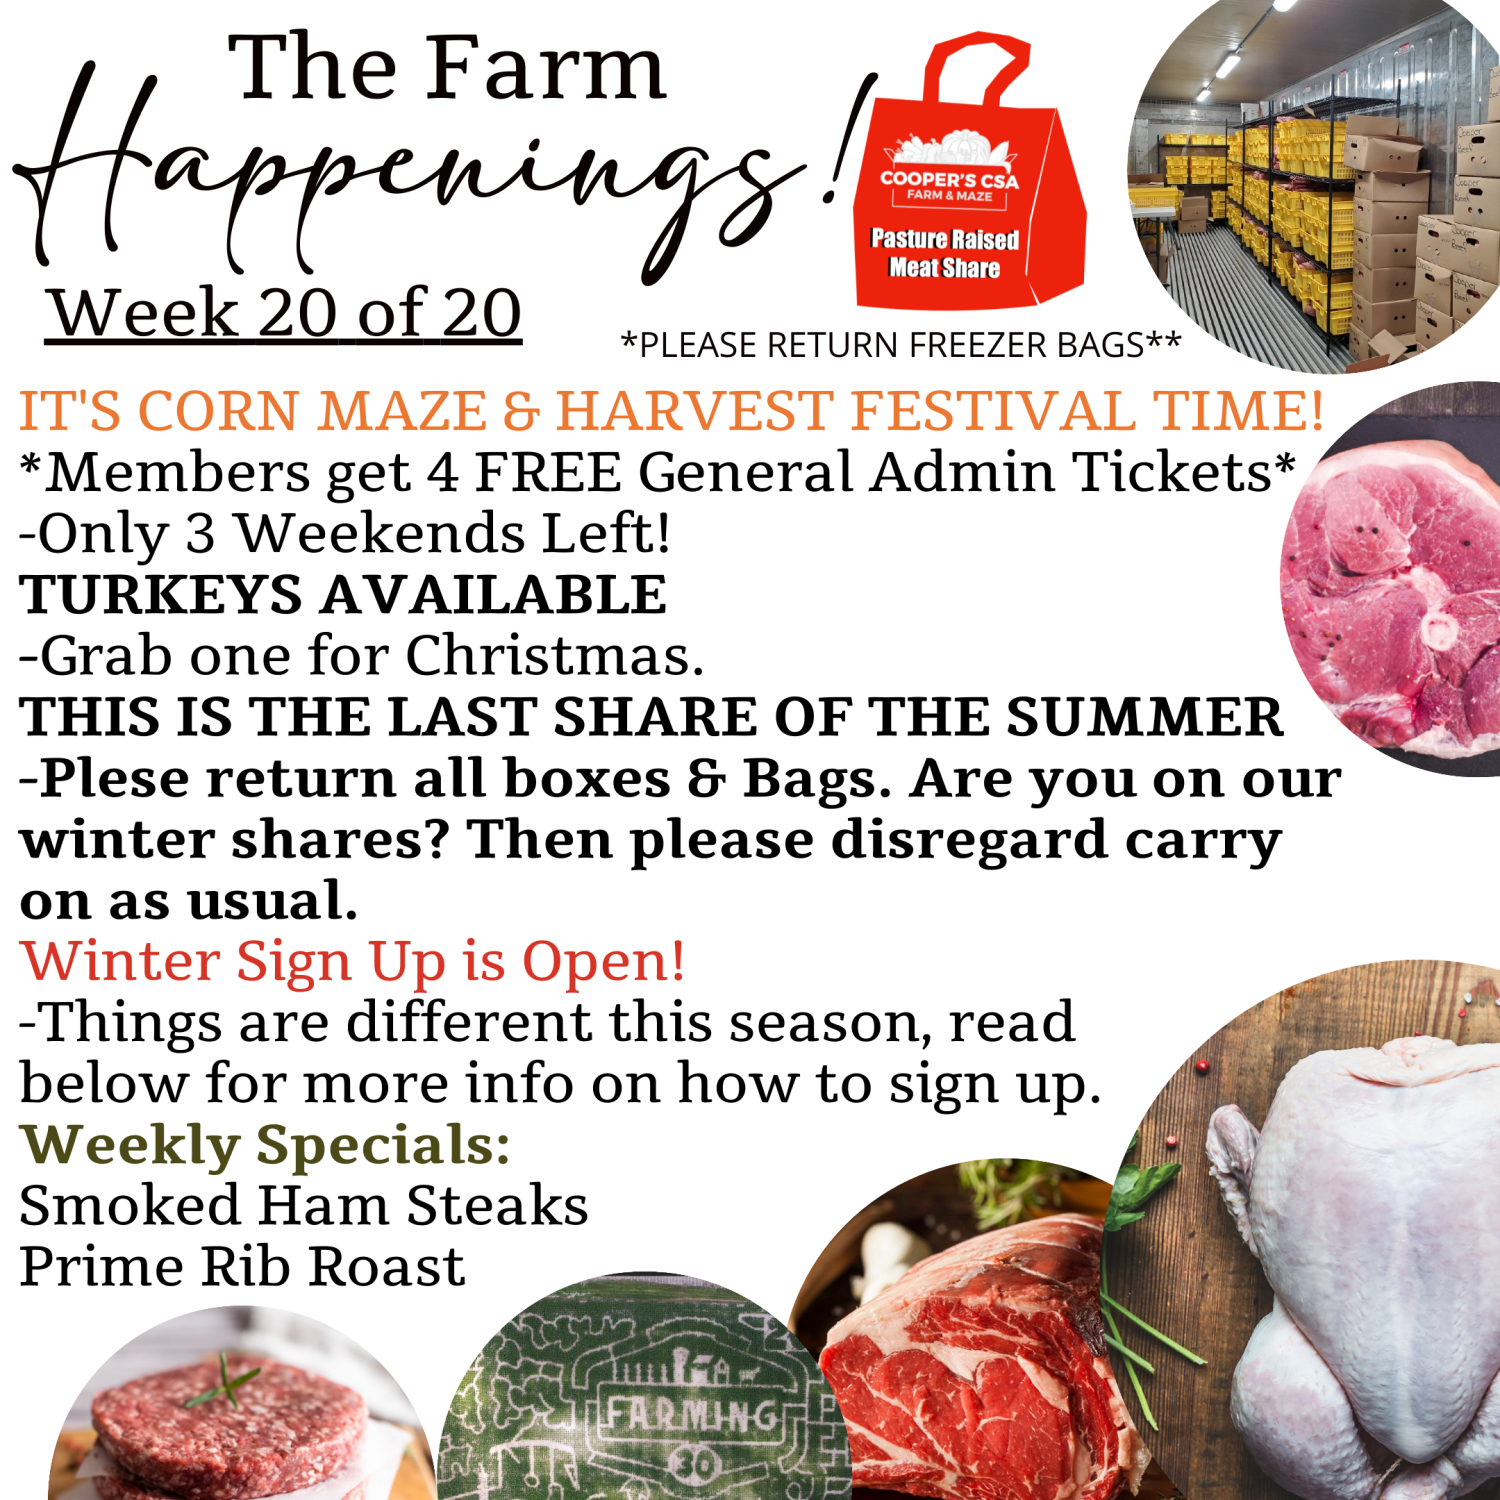 Next Happening: "Pasture Meat Shares"-Coopers CSA Farm Farm Happenings Week 20